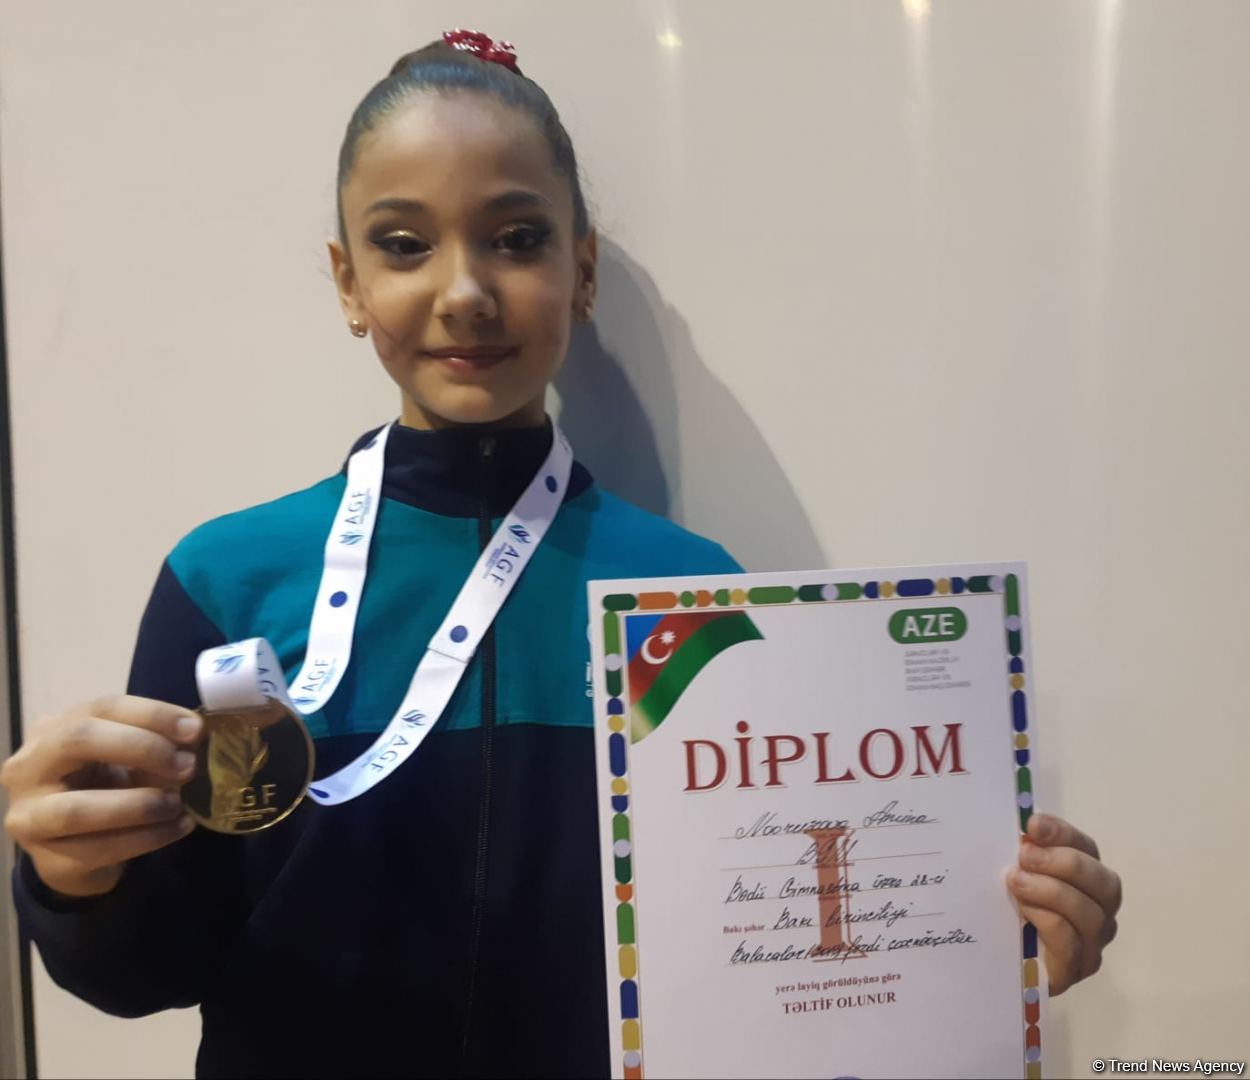 Medal won at Baku Championship in Rhythmic Gymnastics gives extra motivation to train hard – young gymnast